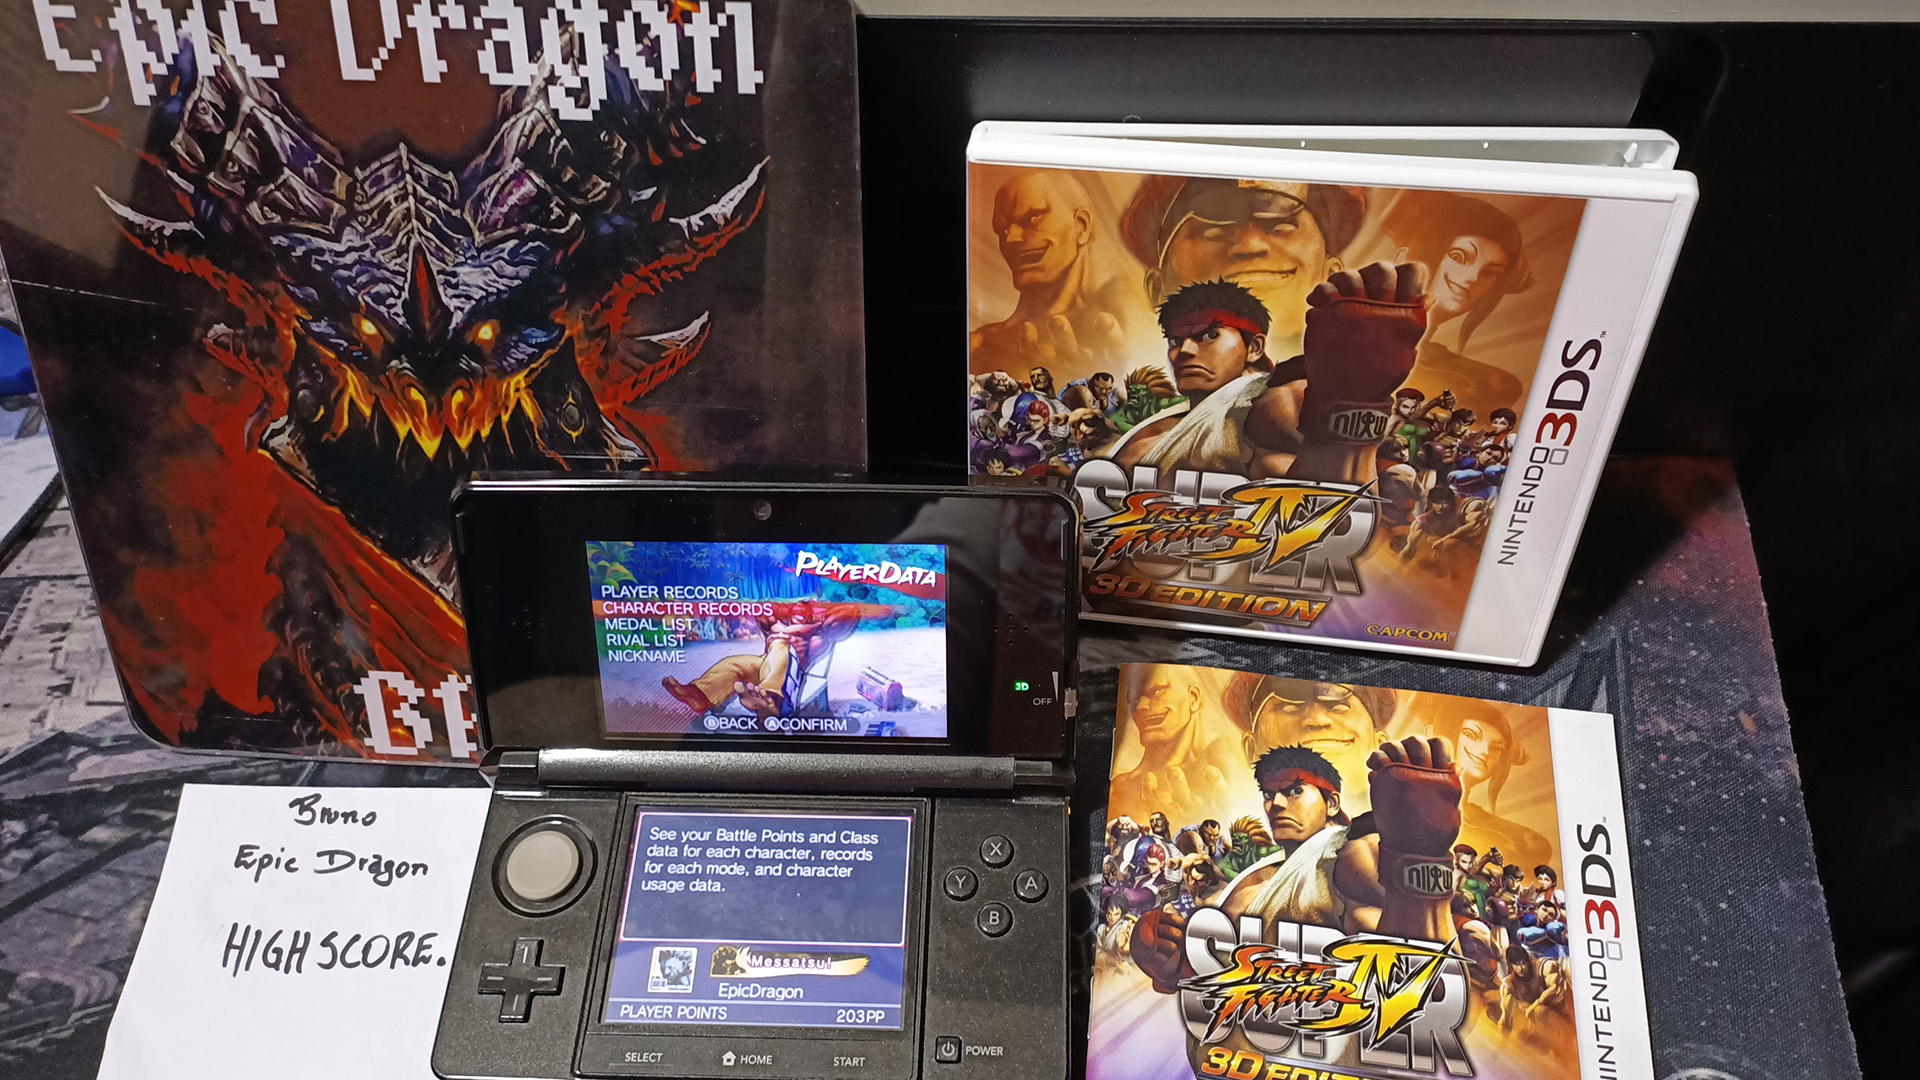 EpicDragon: Super Street Fighter IV 3D Edition: Arcade: Ken (Nintendo 3DS) 644,700 points on 2022-08-08 21:36:46